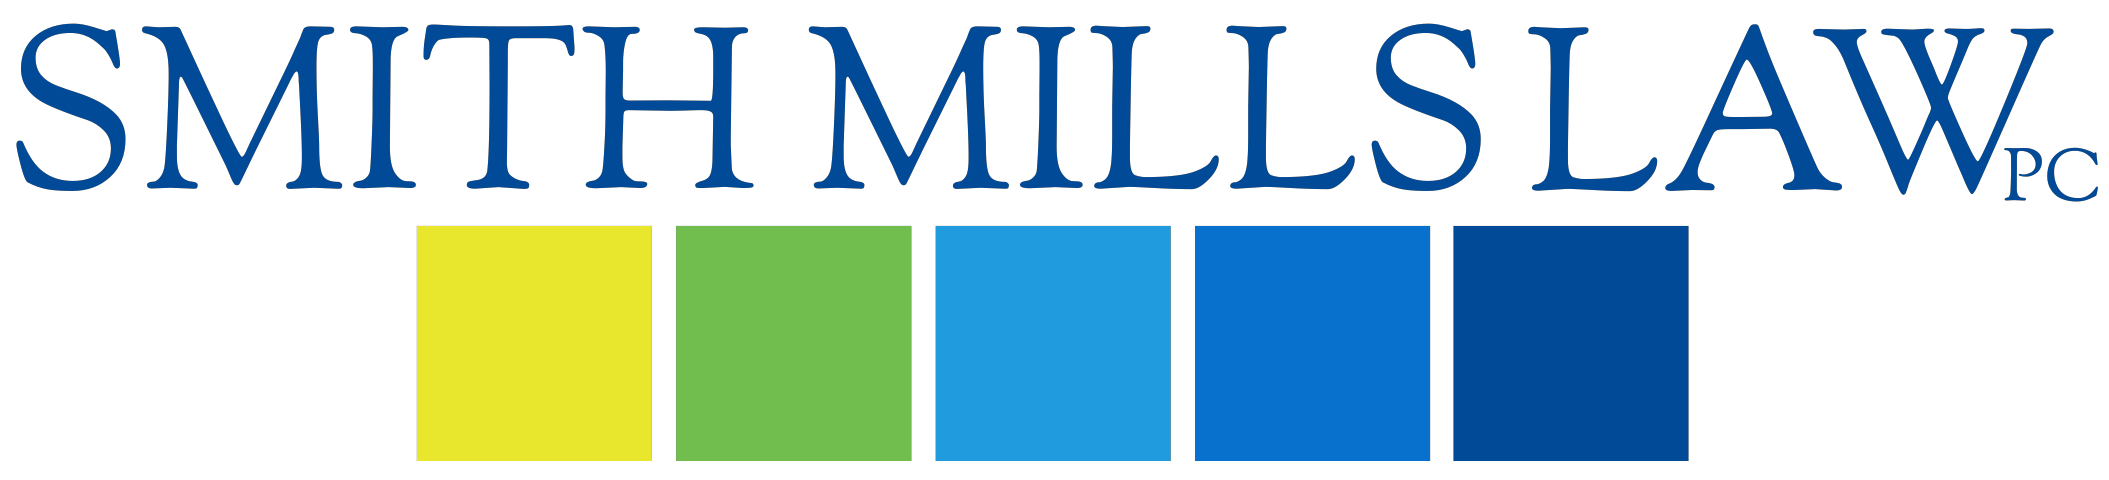 Smith Mills Schrock Law Firm